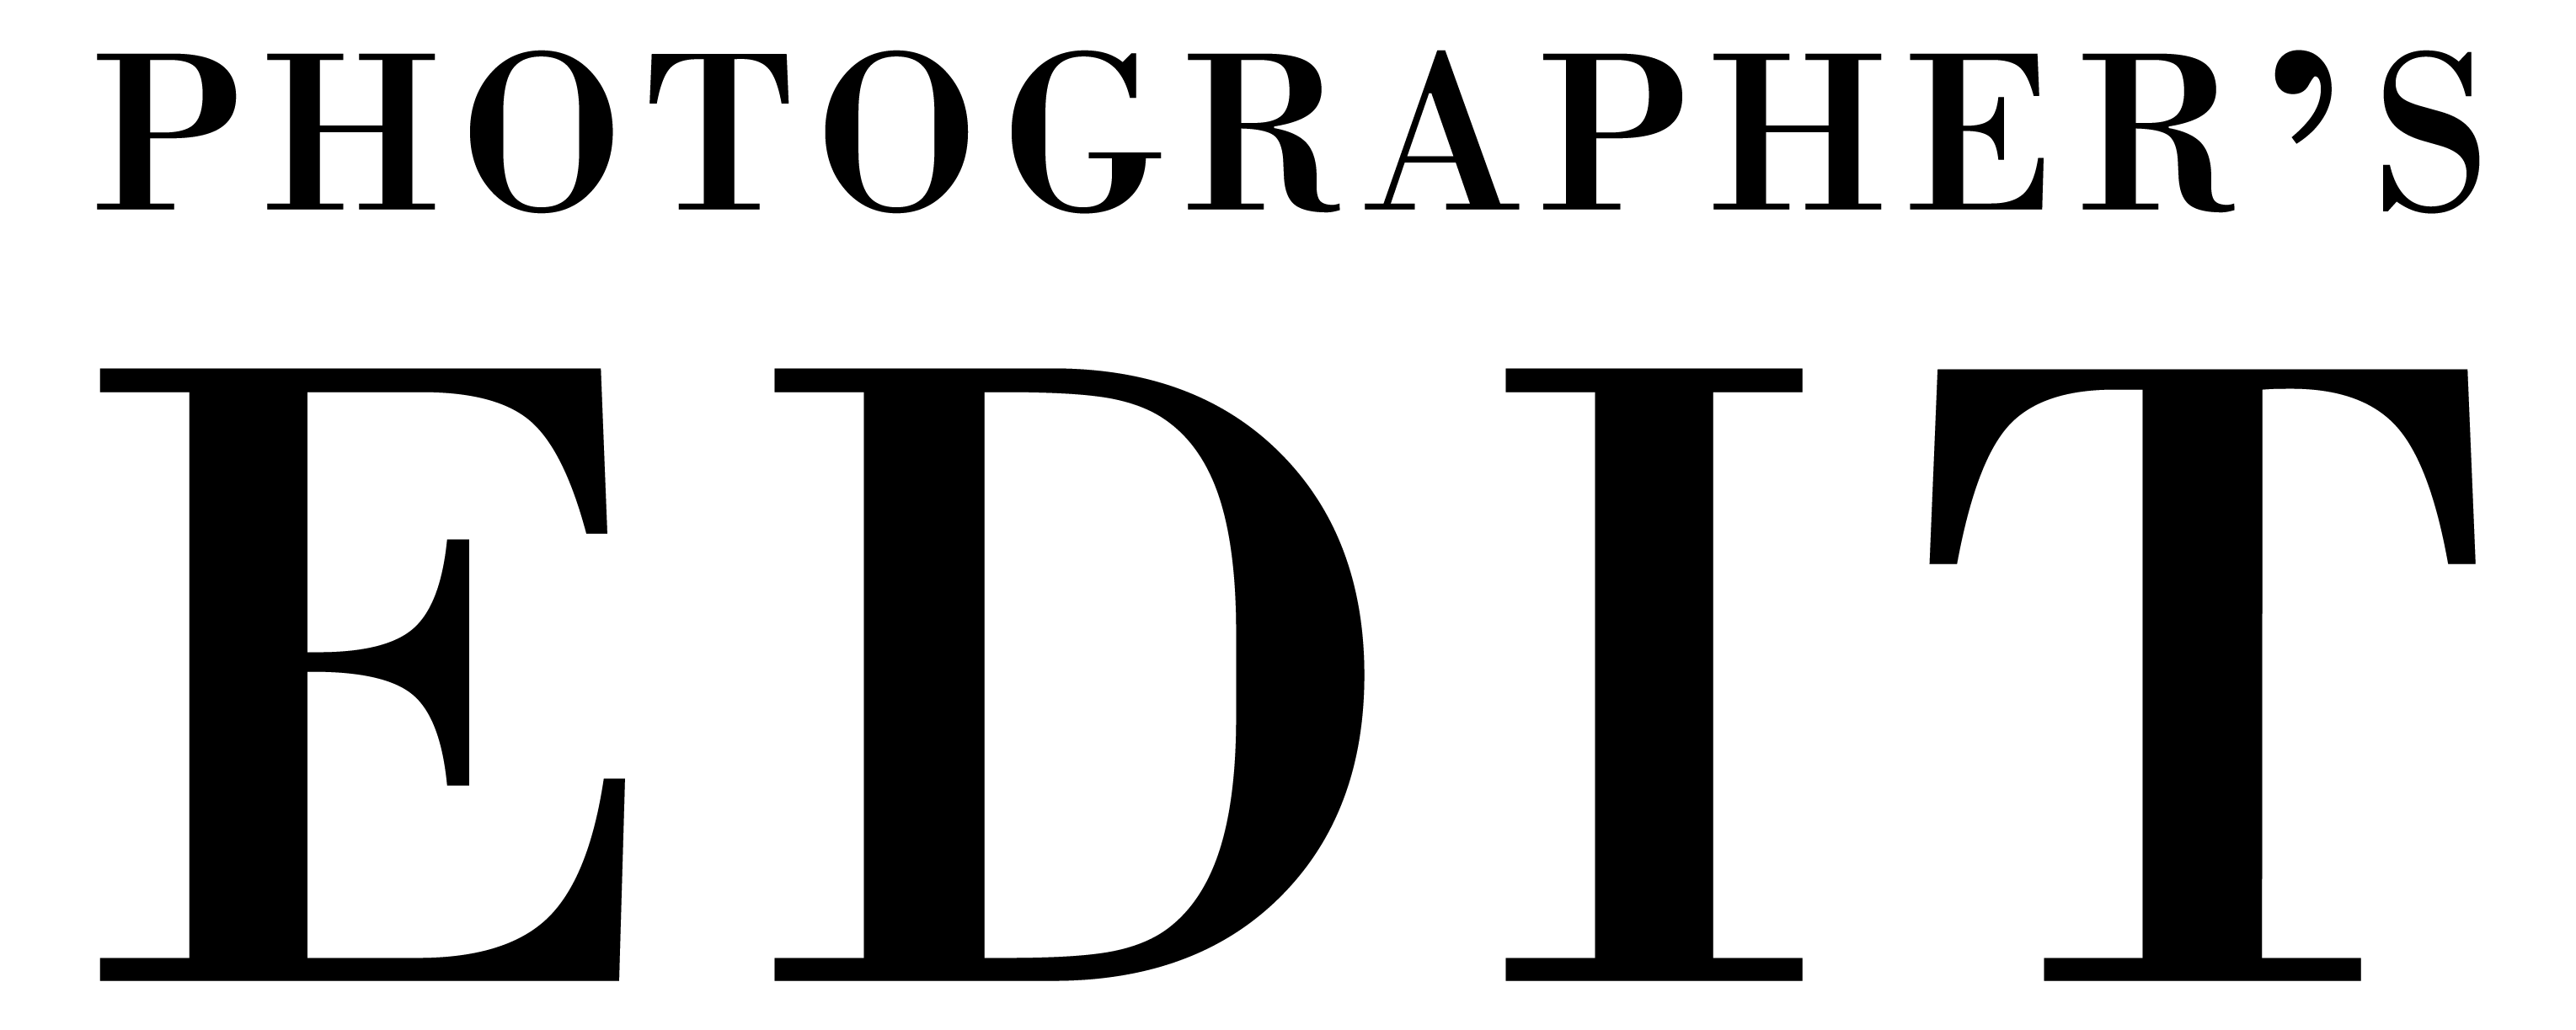 Photographer's Edit logo